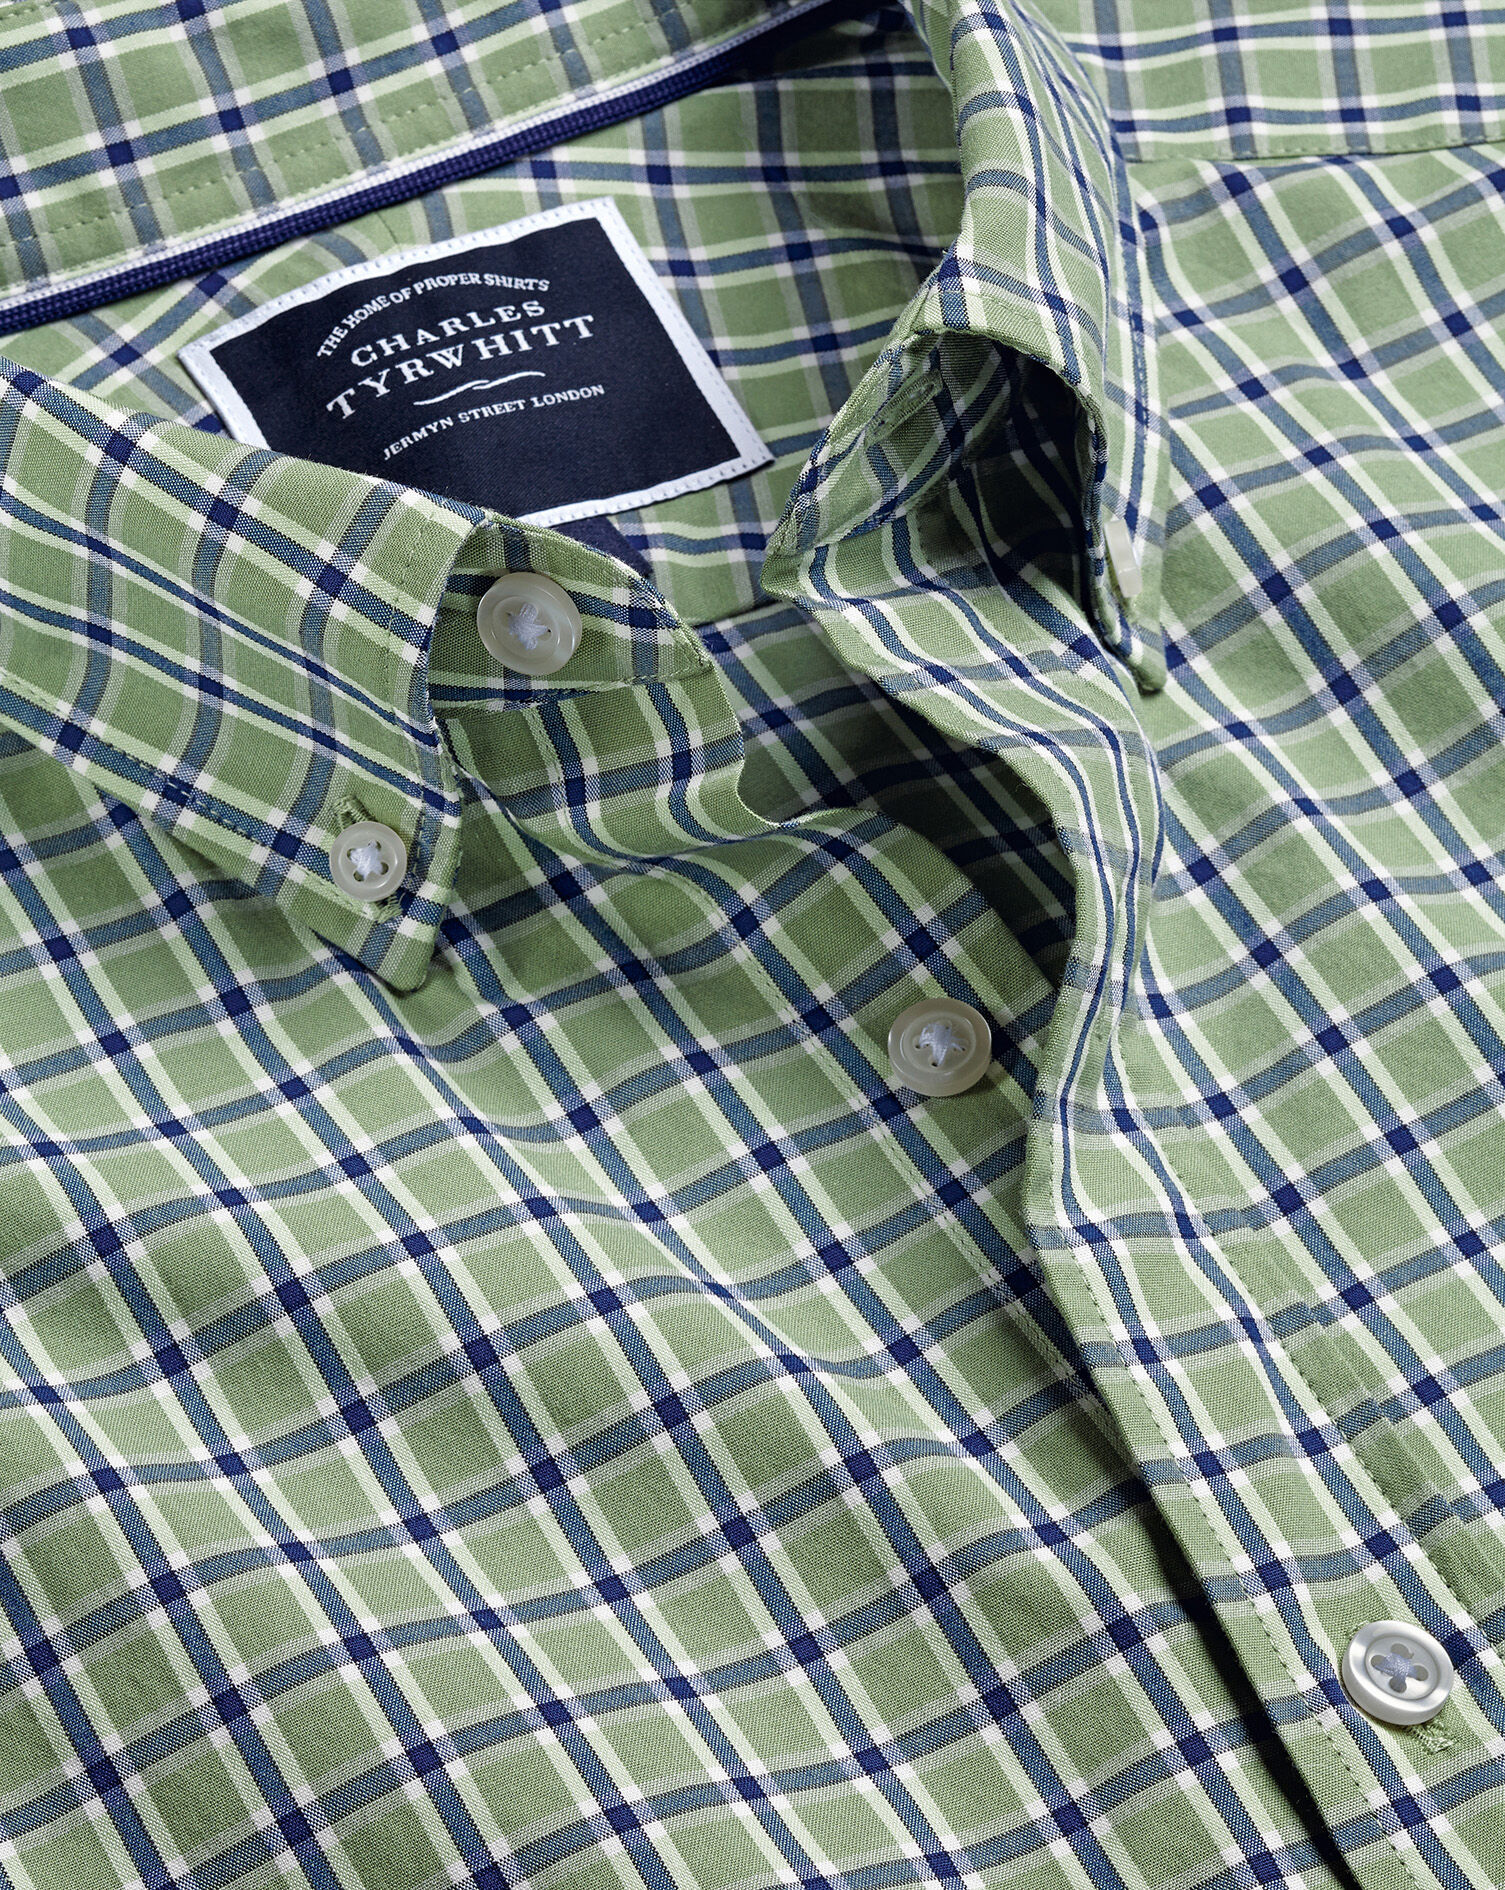 Charles Tyrwhitt Charles Tyrwhitt Men's Shirt Size 15.5 white Checkered cotton 100% green na 39 